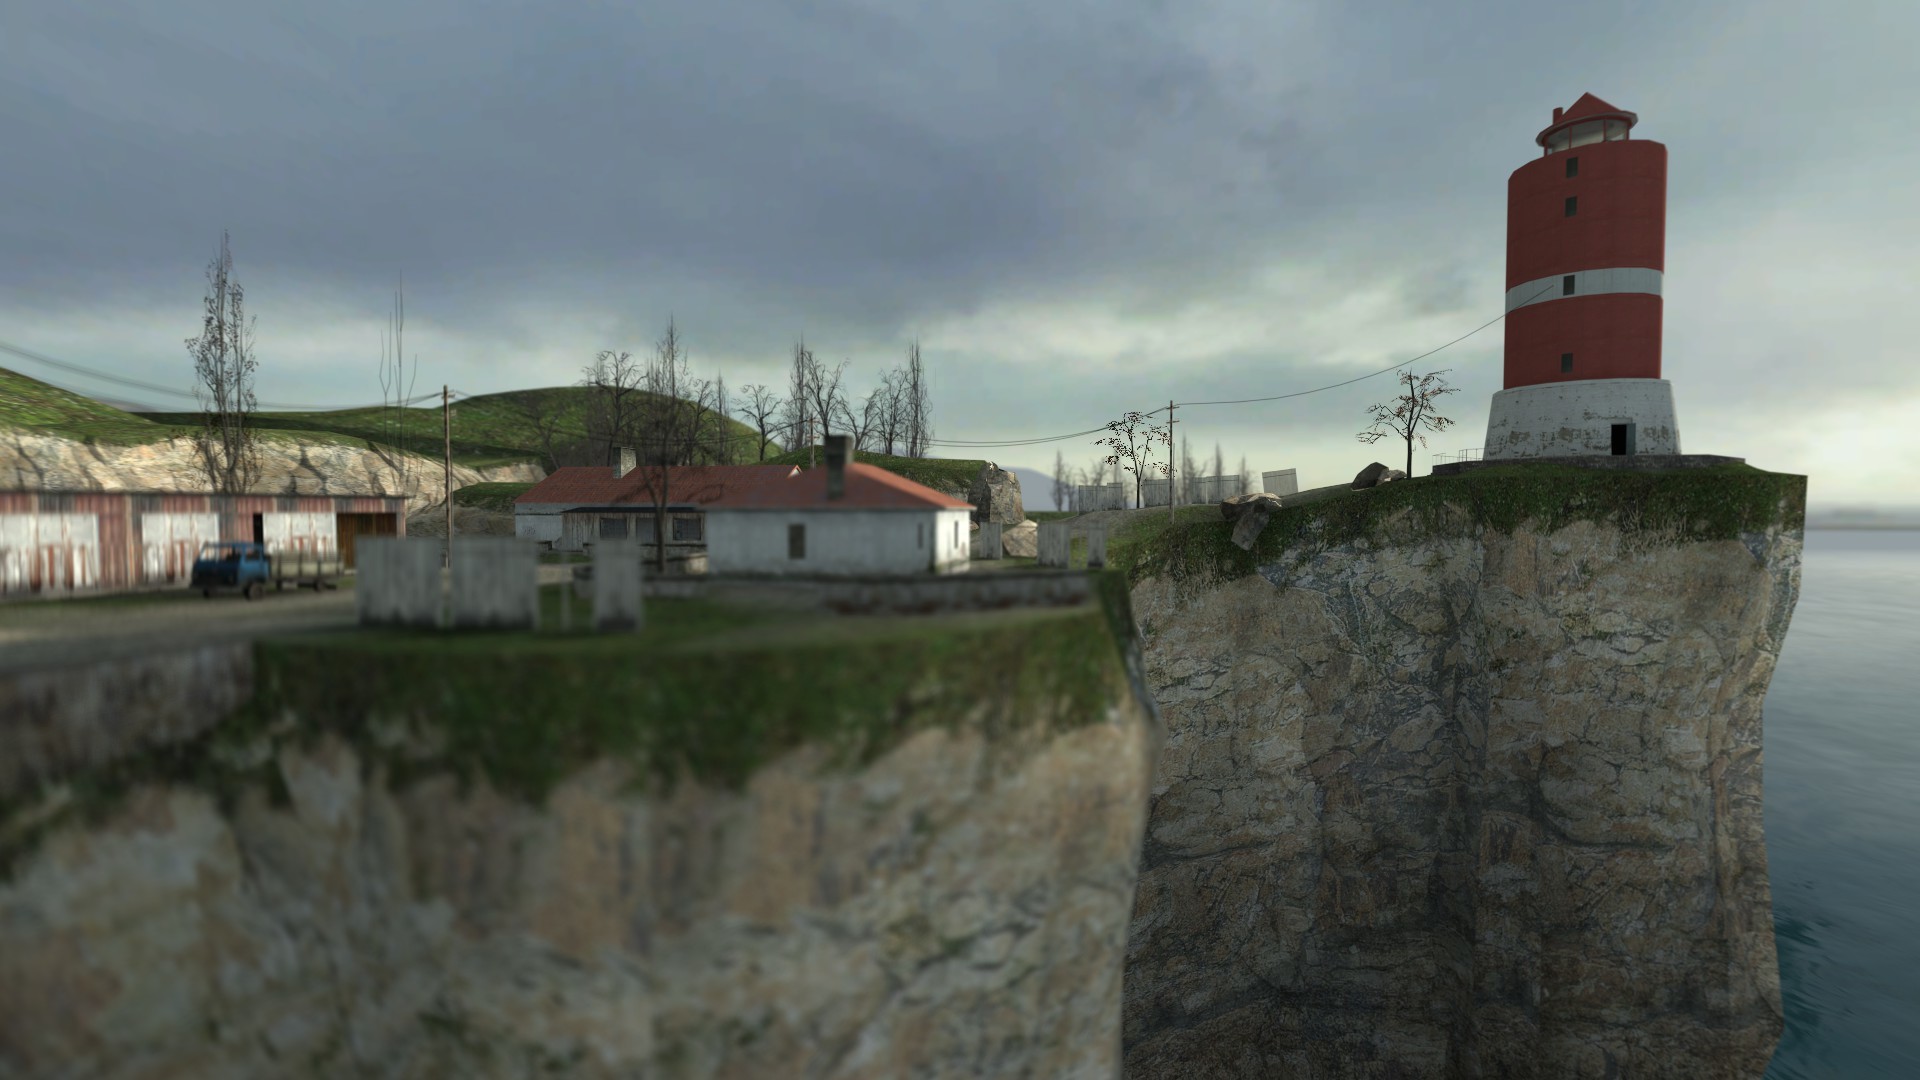 1920x1080 49-Half-Life-2-1080p-Wallpaper-Garrys-Mod -Highway-17-COAST-Landscape-Environment-scenery-set-piece-Lighthouse